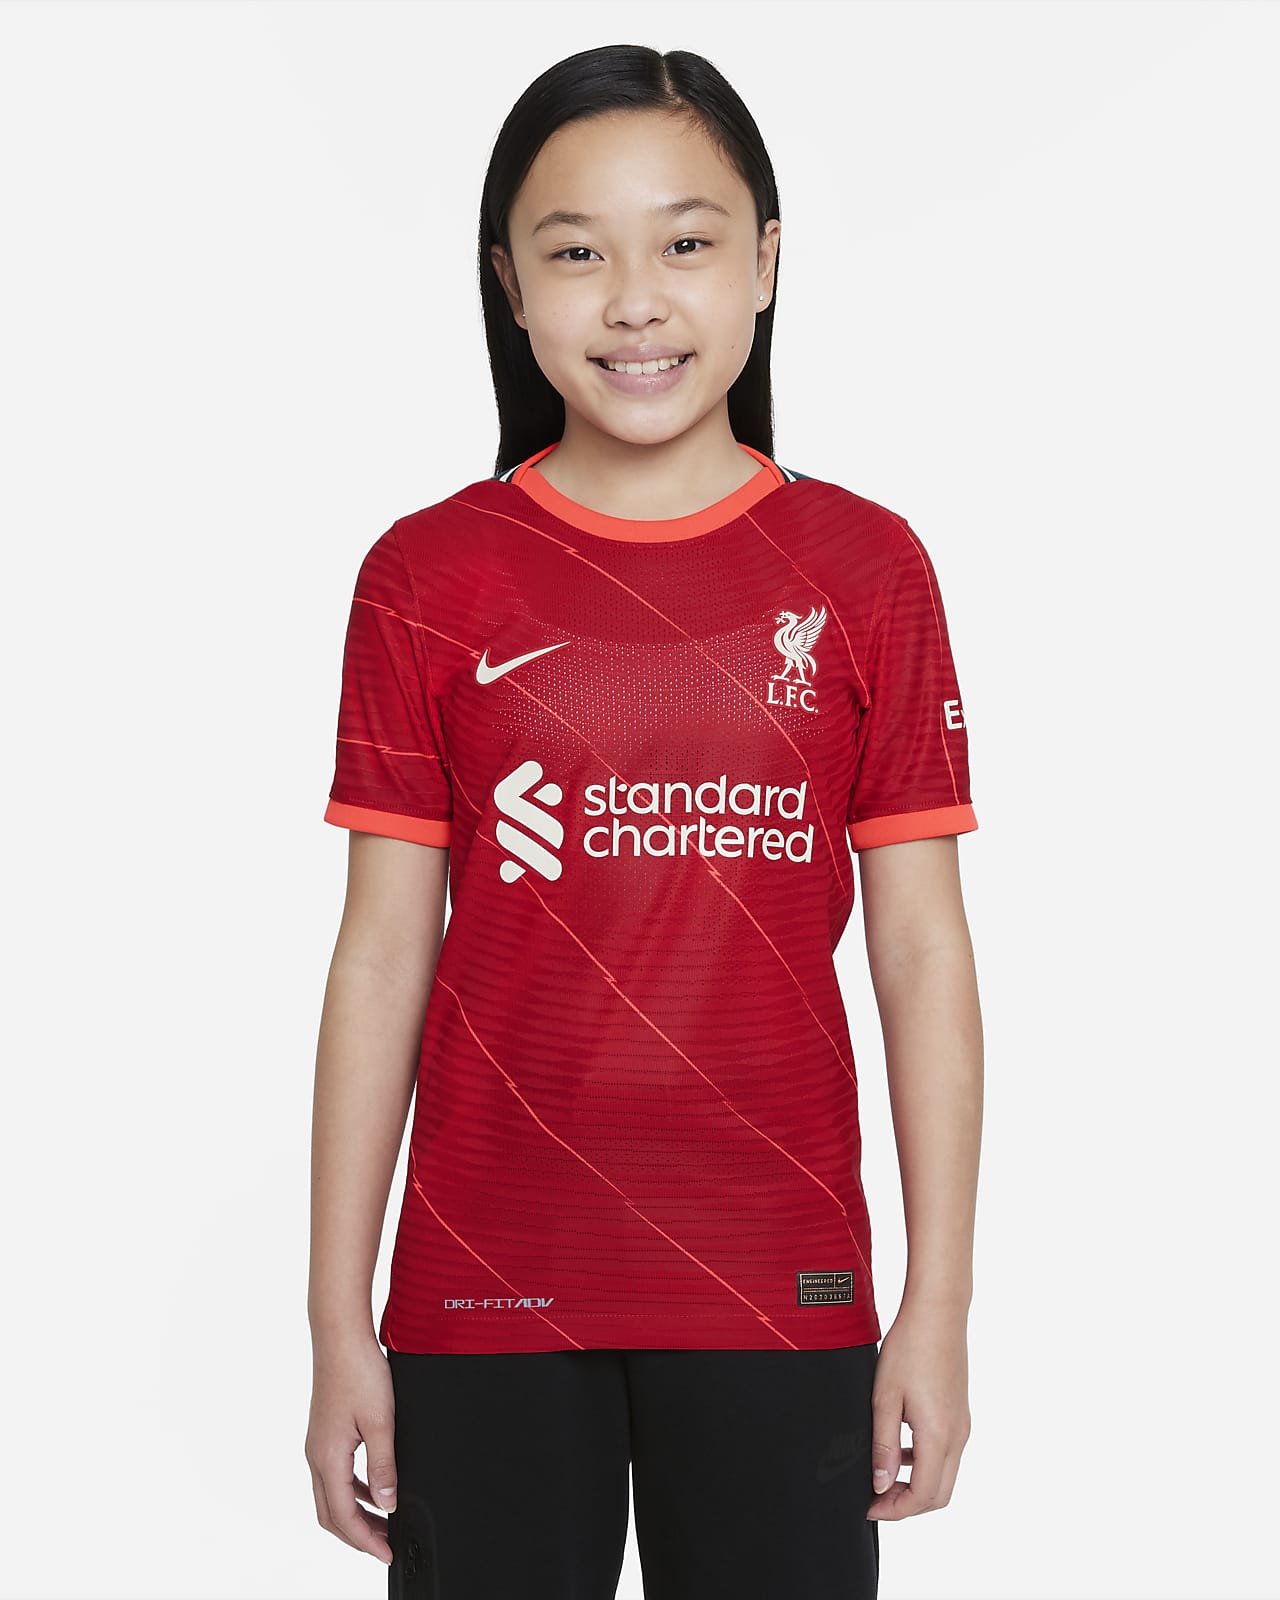 Liverpool FC 2021/22 Match Home Nike Dri-FIT ADV Fußballtrikot für ältere Kinder